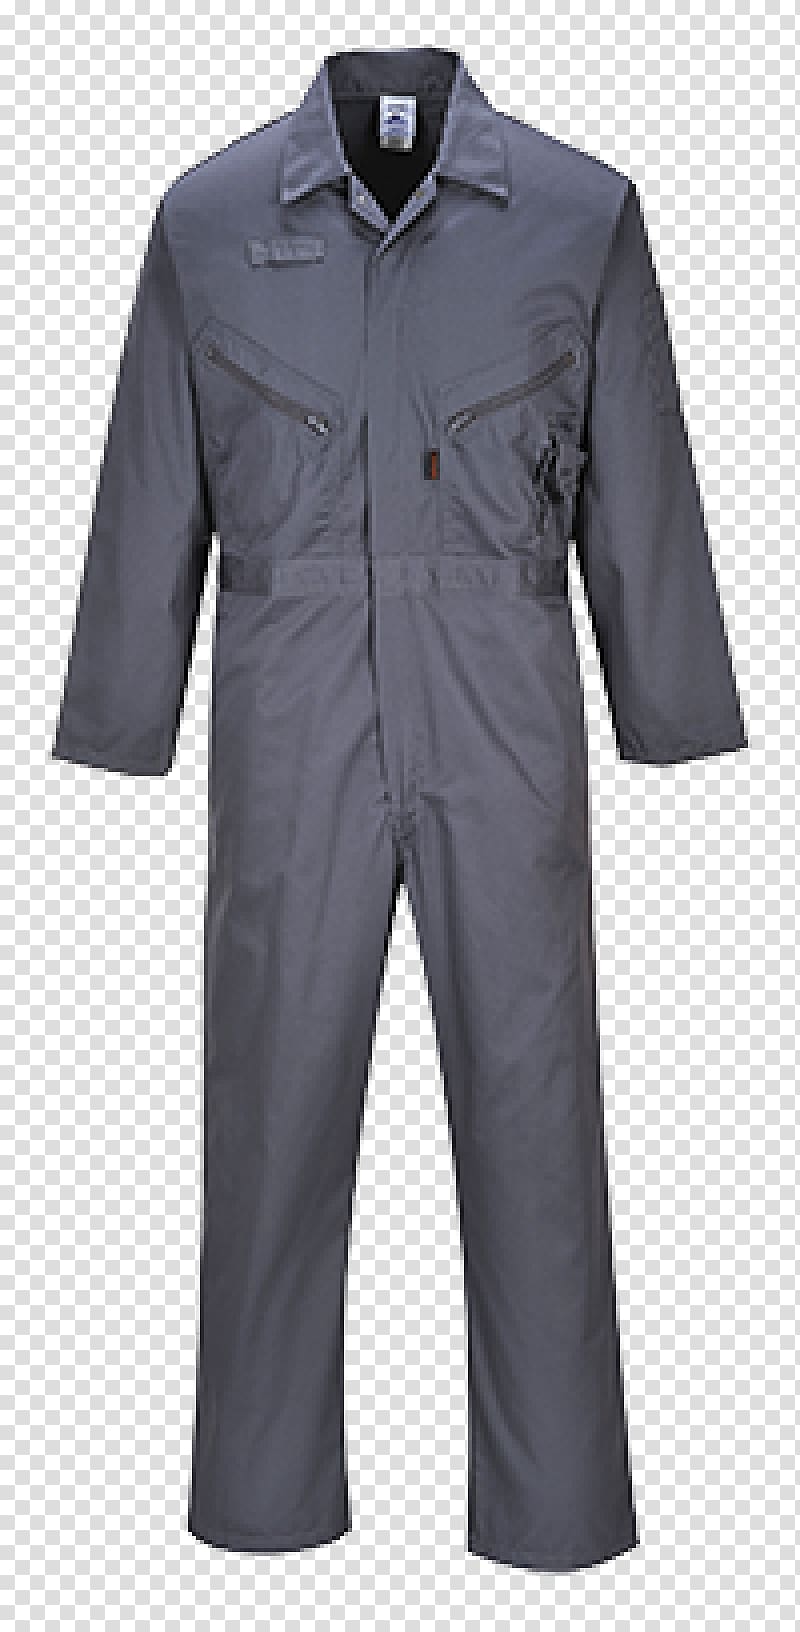 Boilersuit Sleeve Clothing Outerwear Jacket, jacket transparent background PNG clipart